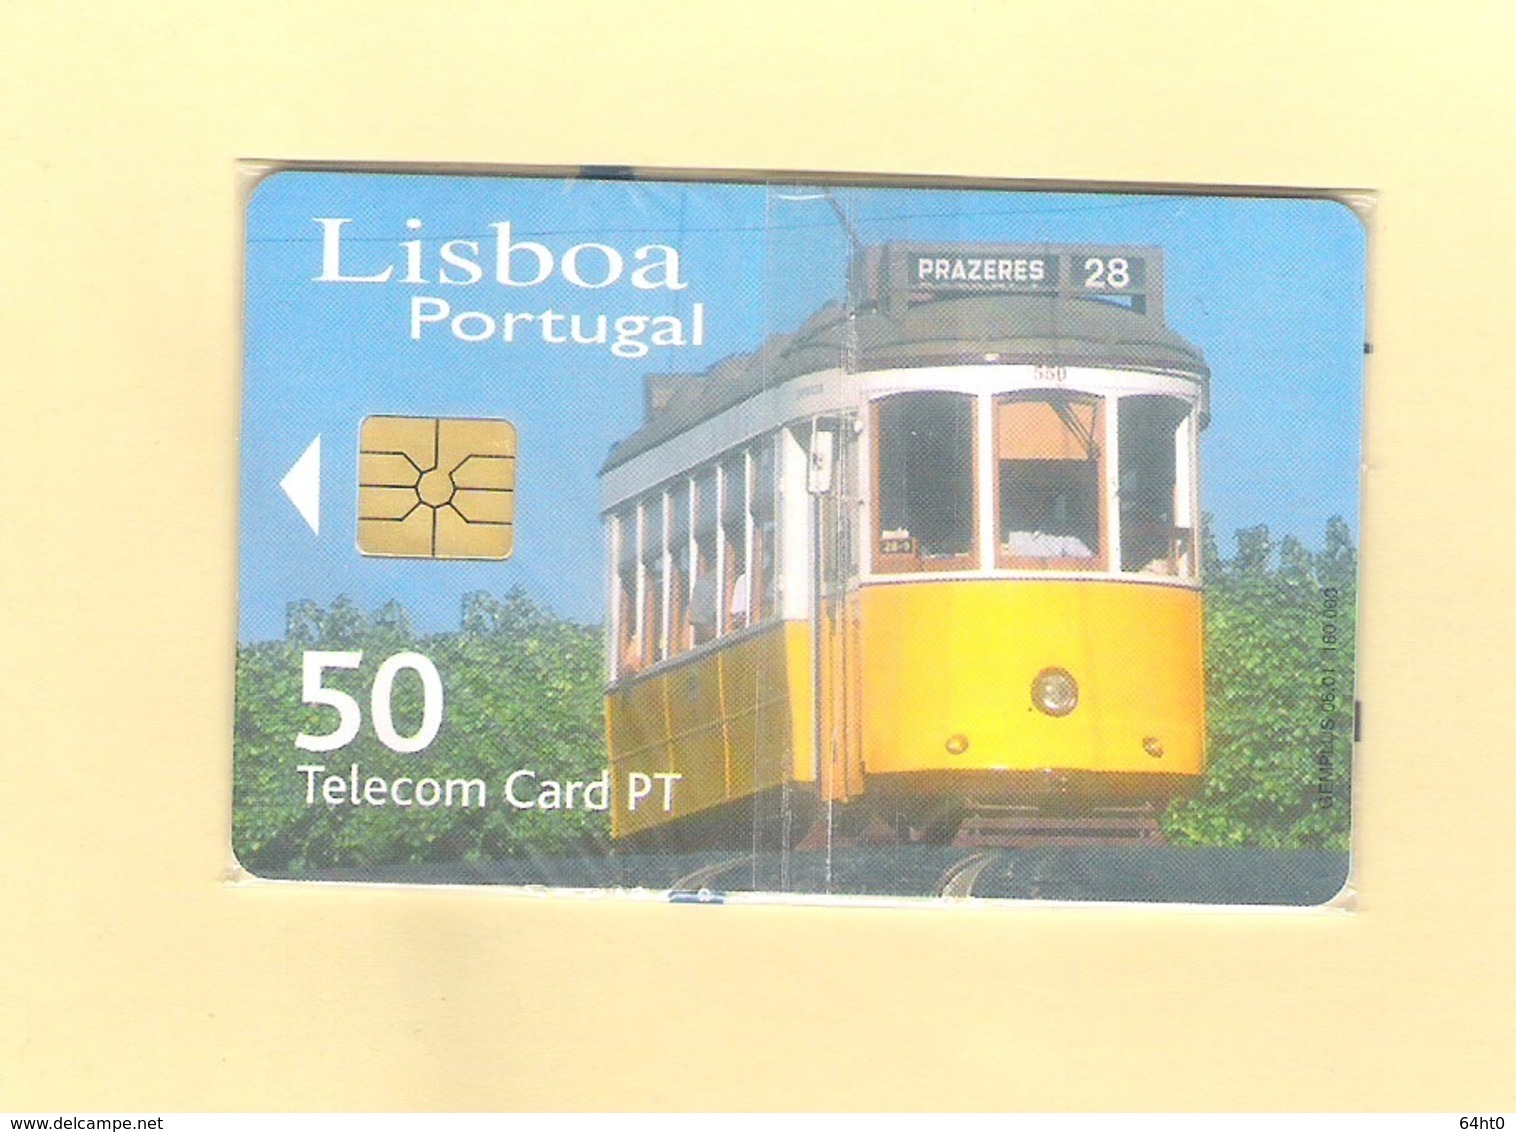 PHONECARD - PORTUGAL "TRAM - LISBOA 2001" PT339 - MINT/SEALED - Portugal